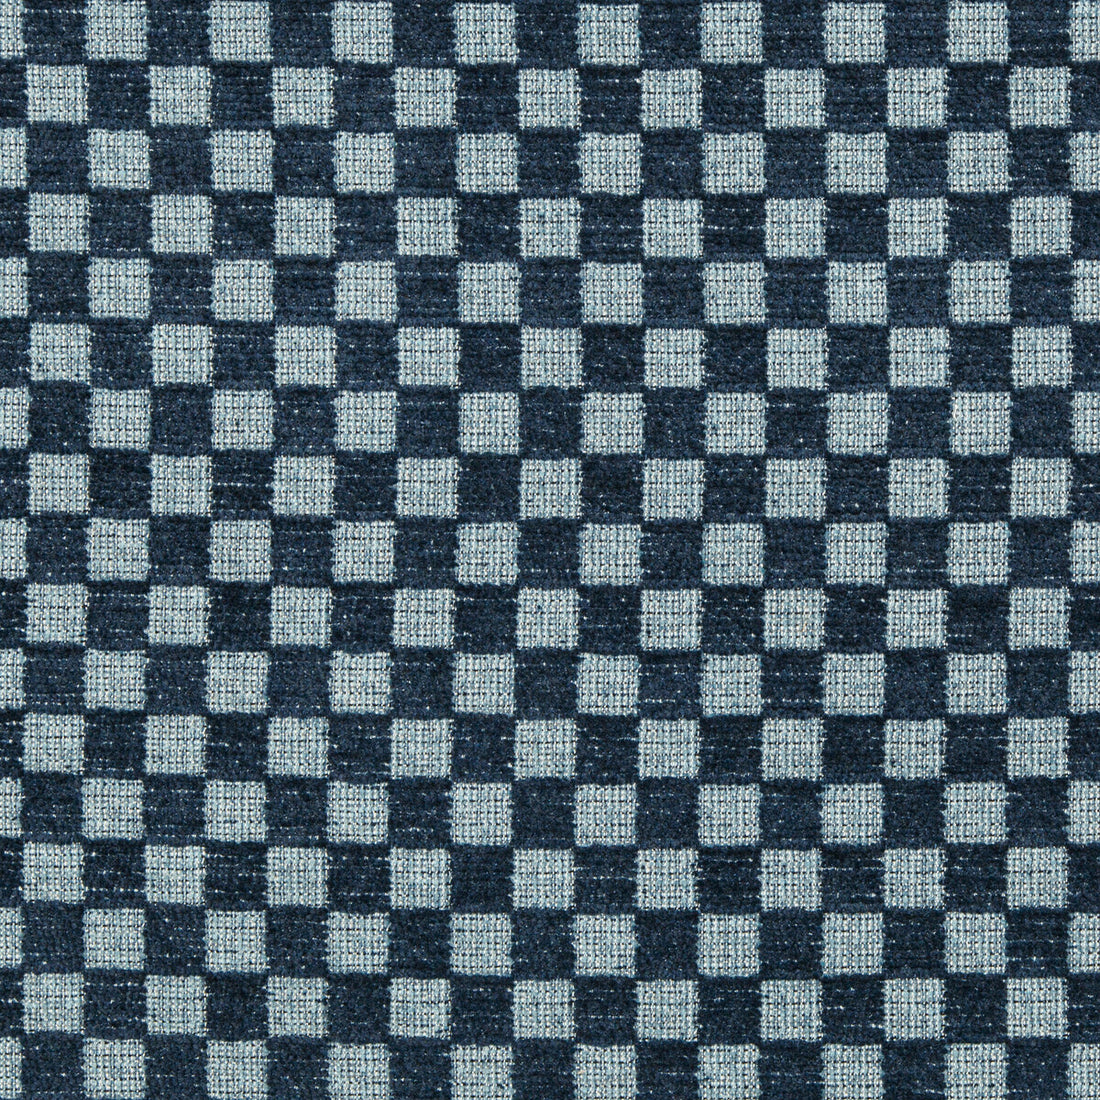 Lj Grw fabric - pattern 2019144.50.0 - by Lee Jofa Modern in the Kw Terra Firma III Indoor Outdoor collection